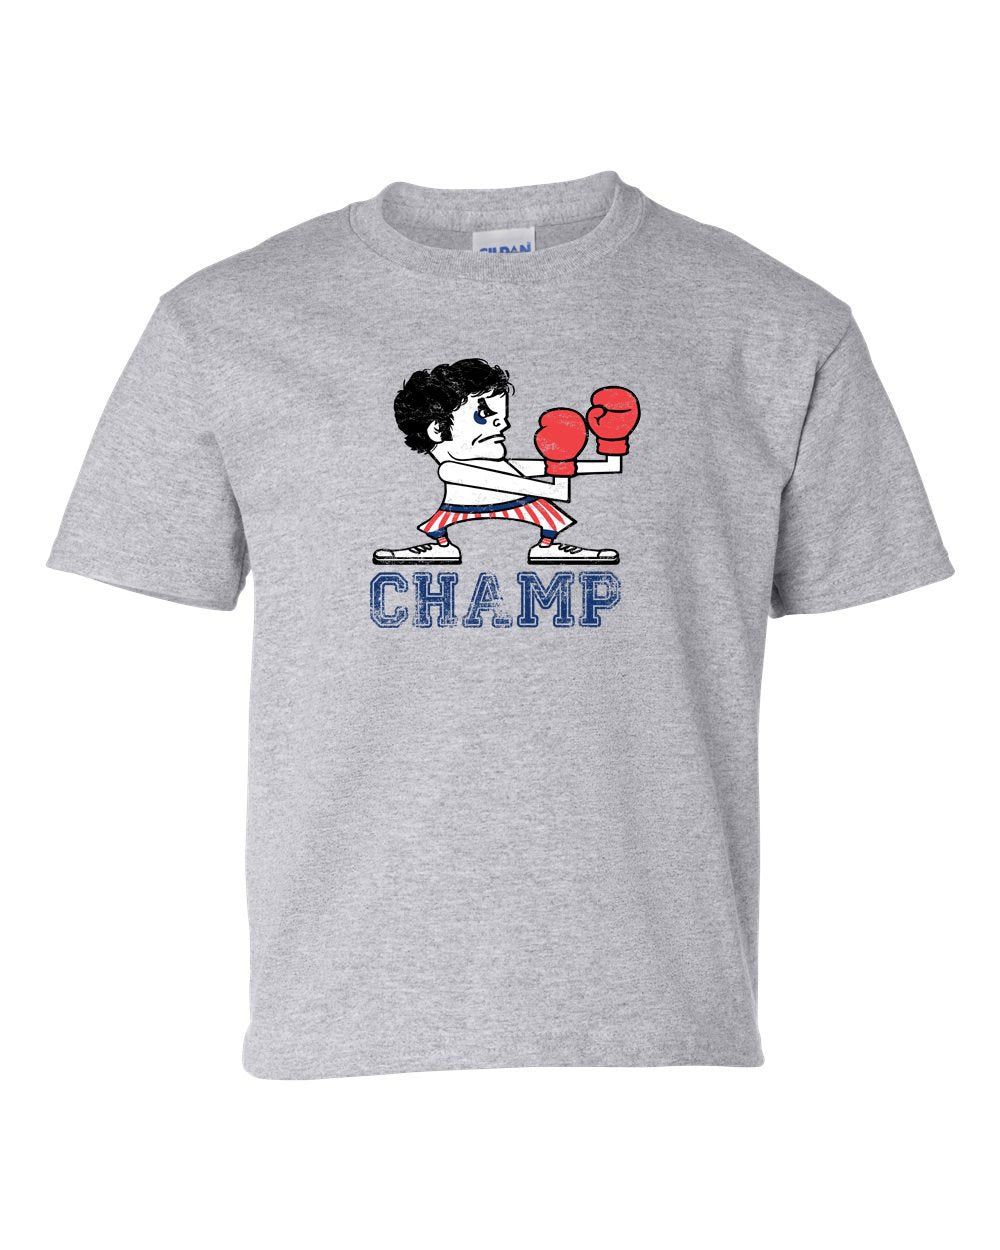 Champ KIDS T-Shirt